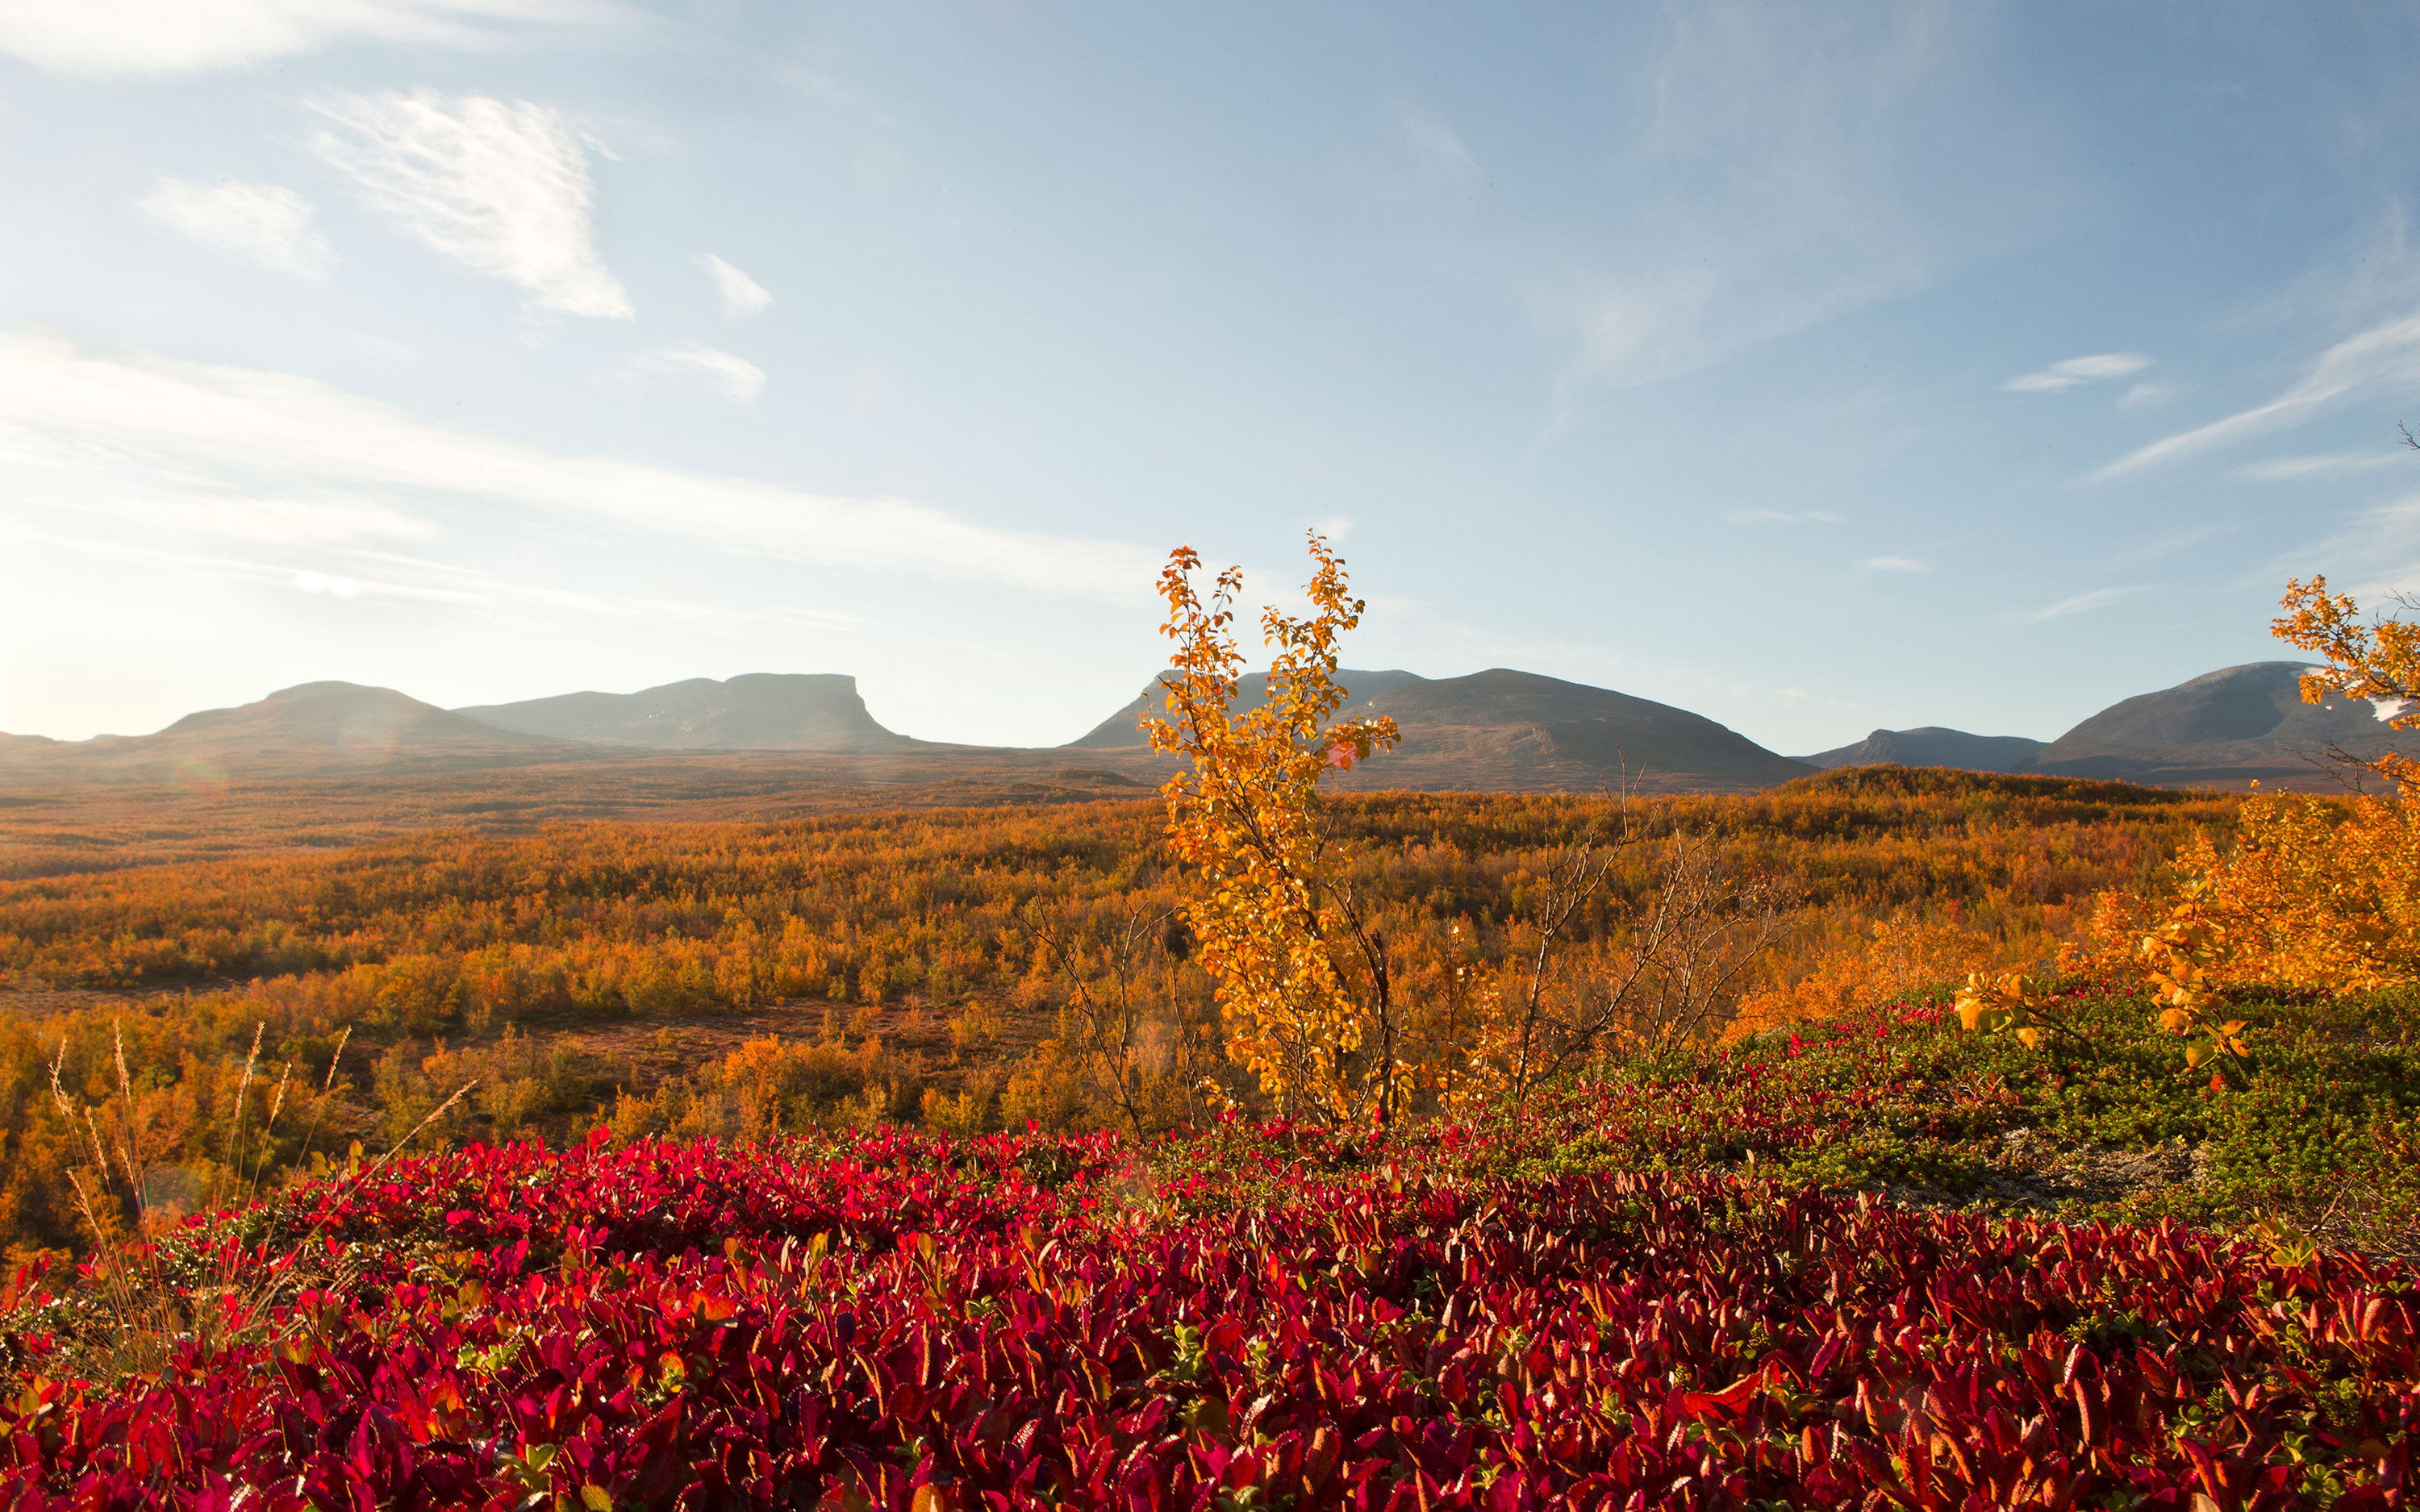 Mountain landscape in autumn colors.